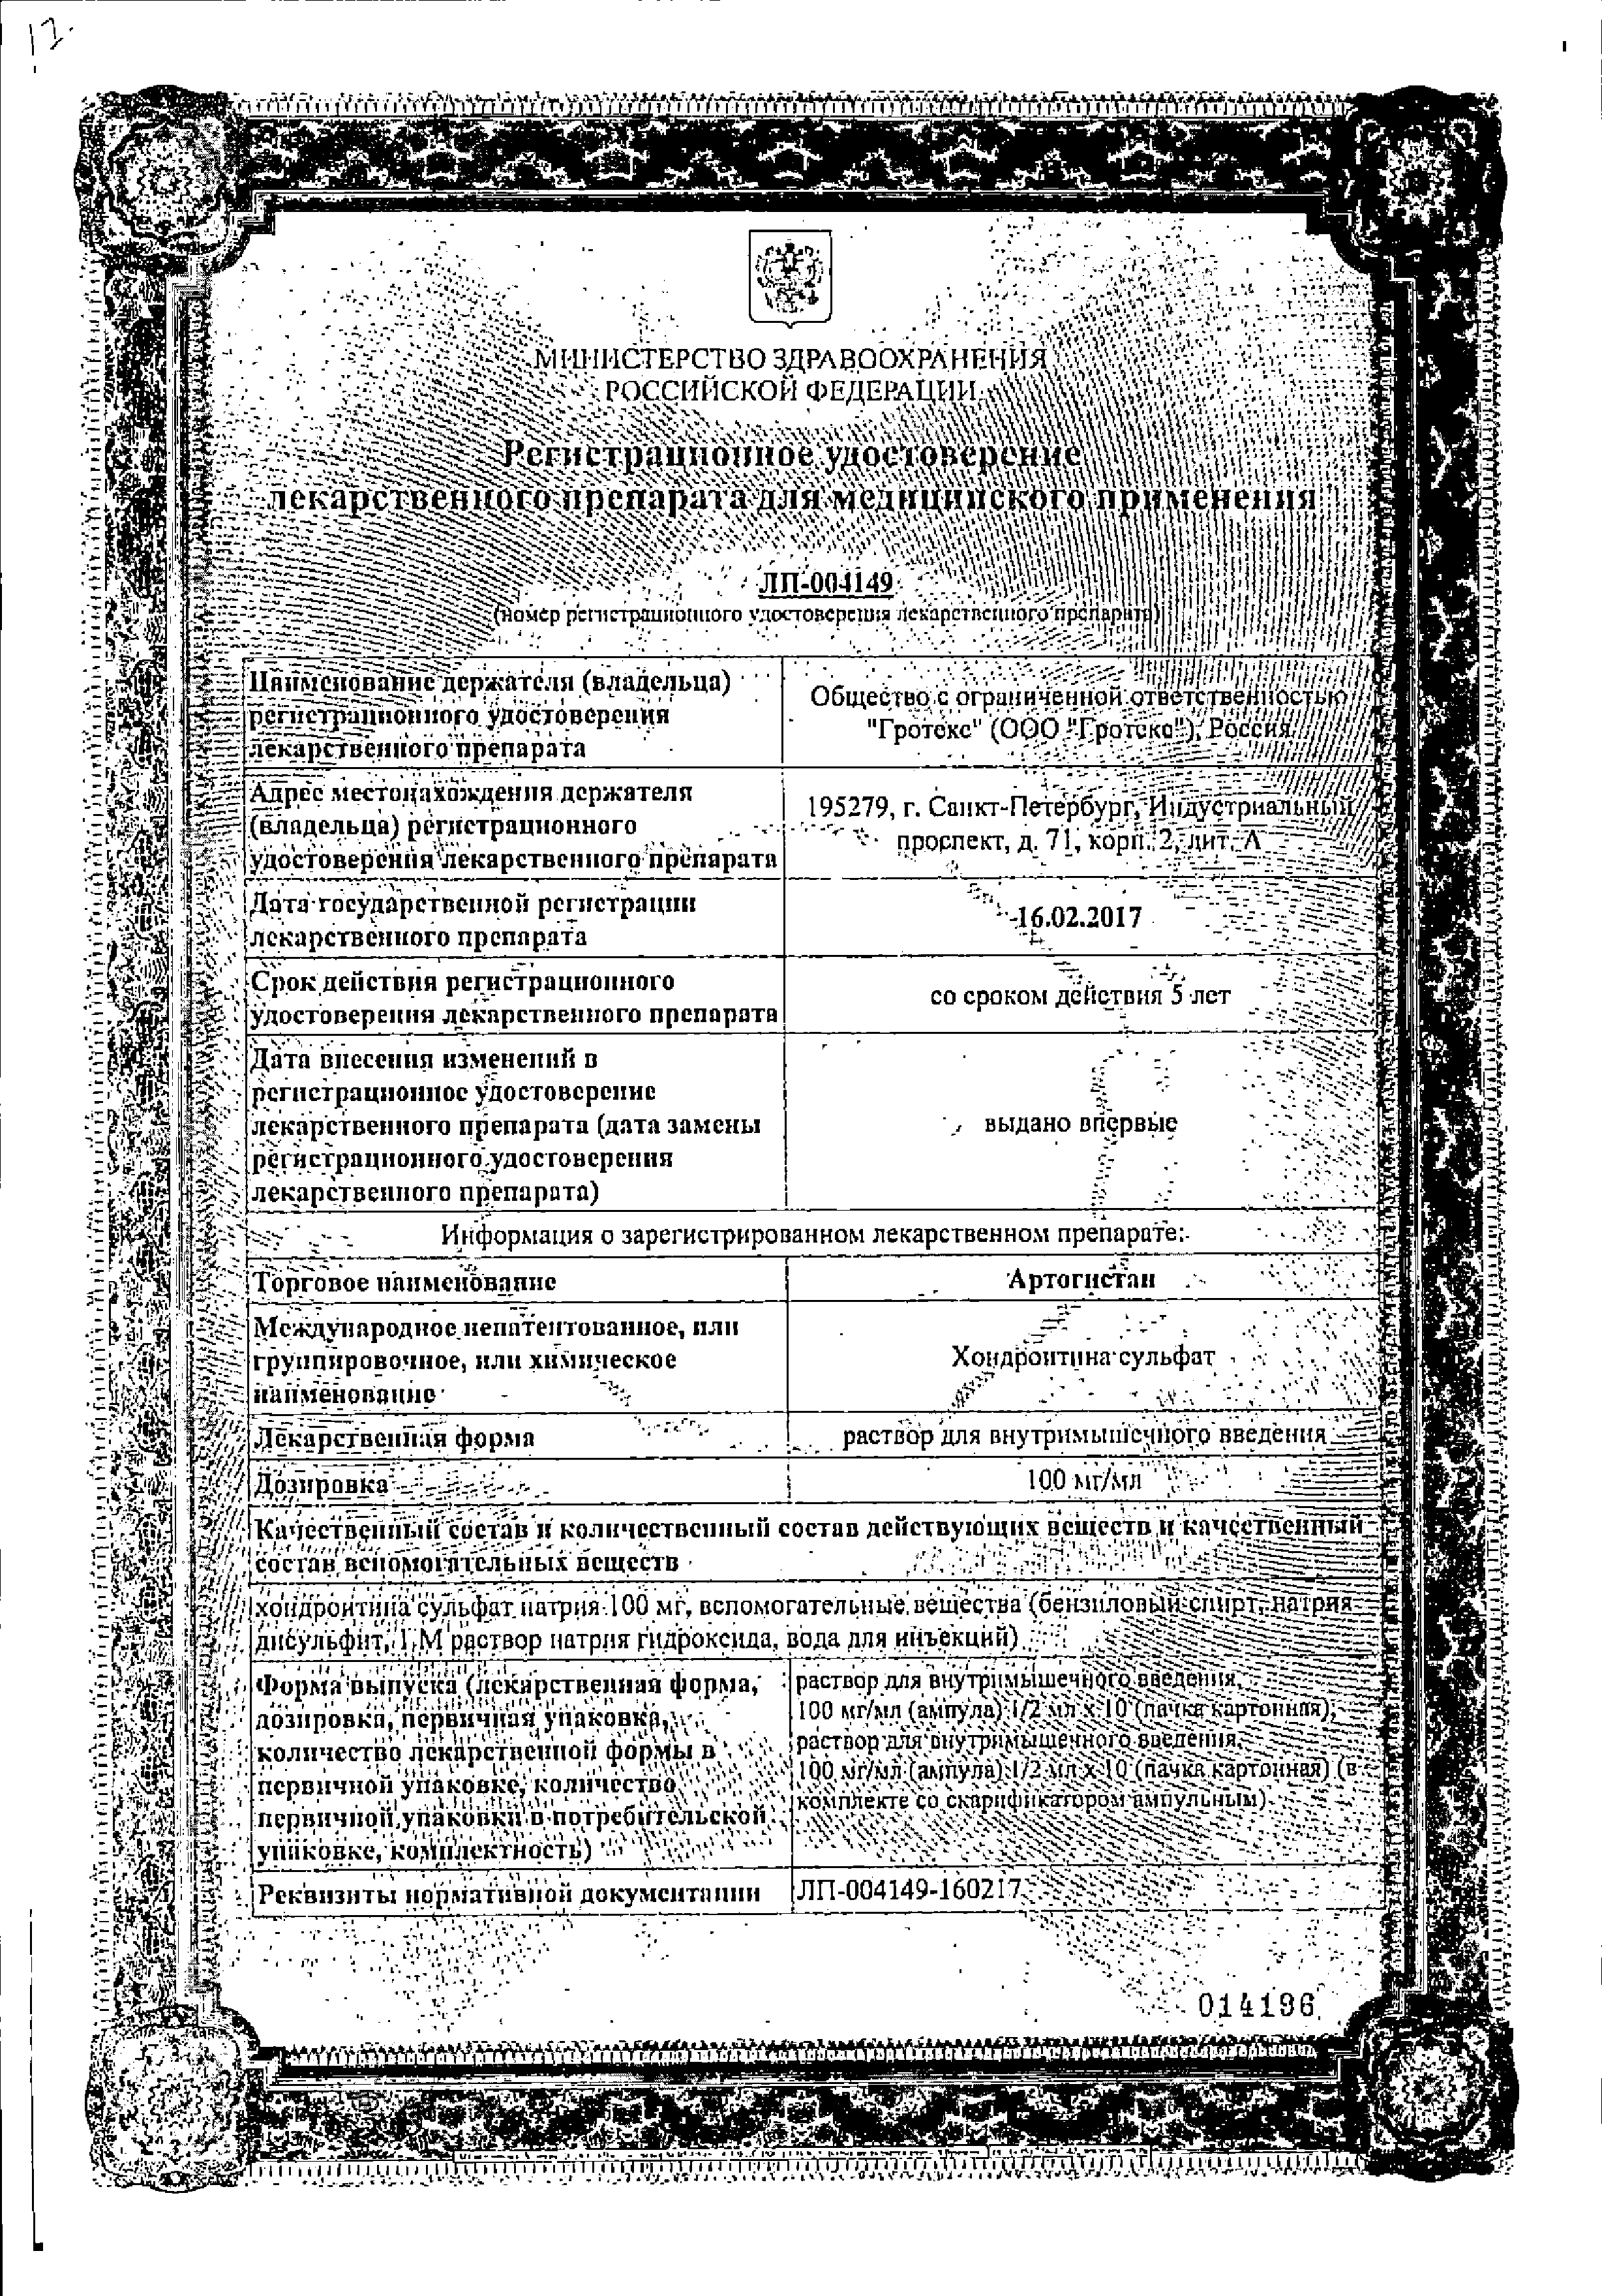 Артогистан сертификат